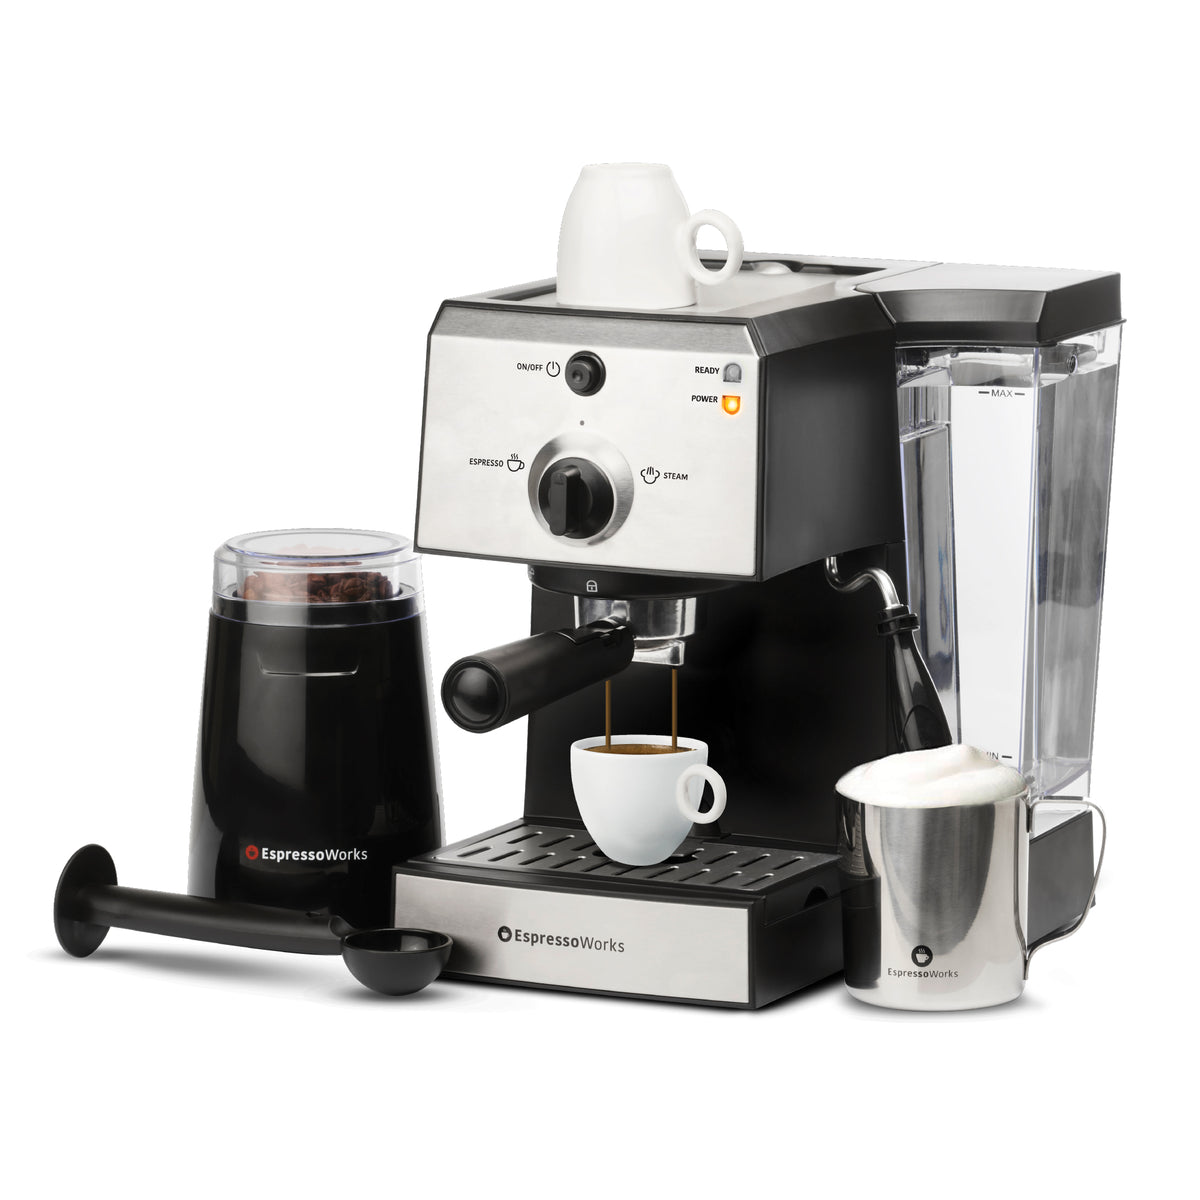 Replacement PReplacement Portafilter for the 7-piece 15-bar EspressoWorks Espresso Machine Set